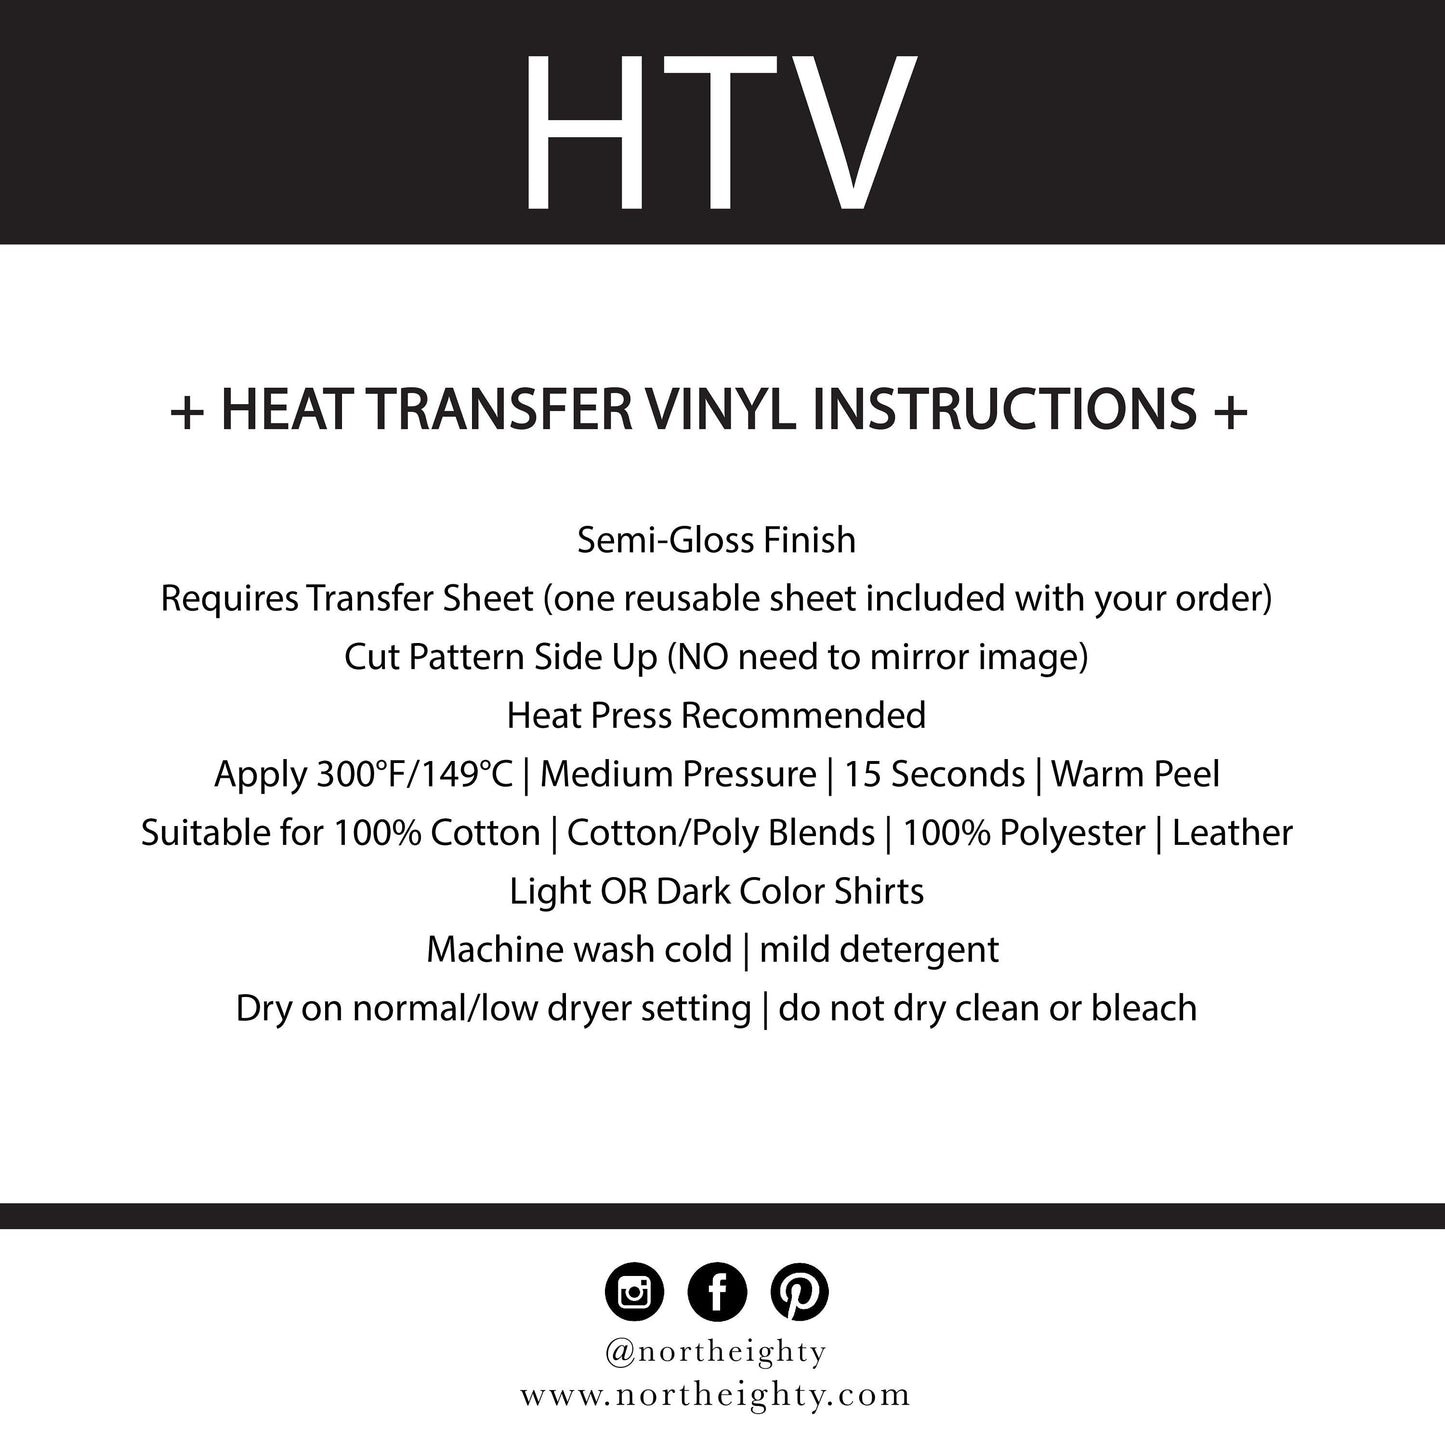 Lace Vinyl - Black And White Vinyl - HTV - Heat Transfer Vinyl - Adhesive Vinyl - Sublimation - Flood Sheet - Paper - Lace - Black and White